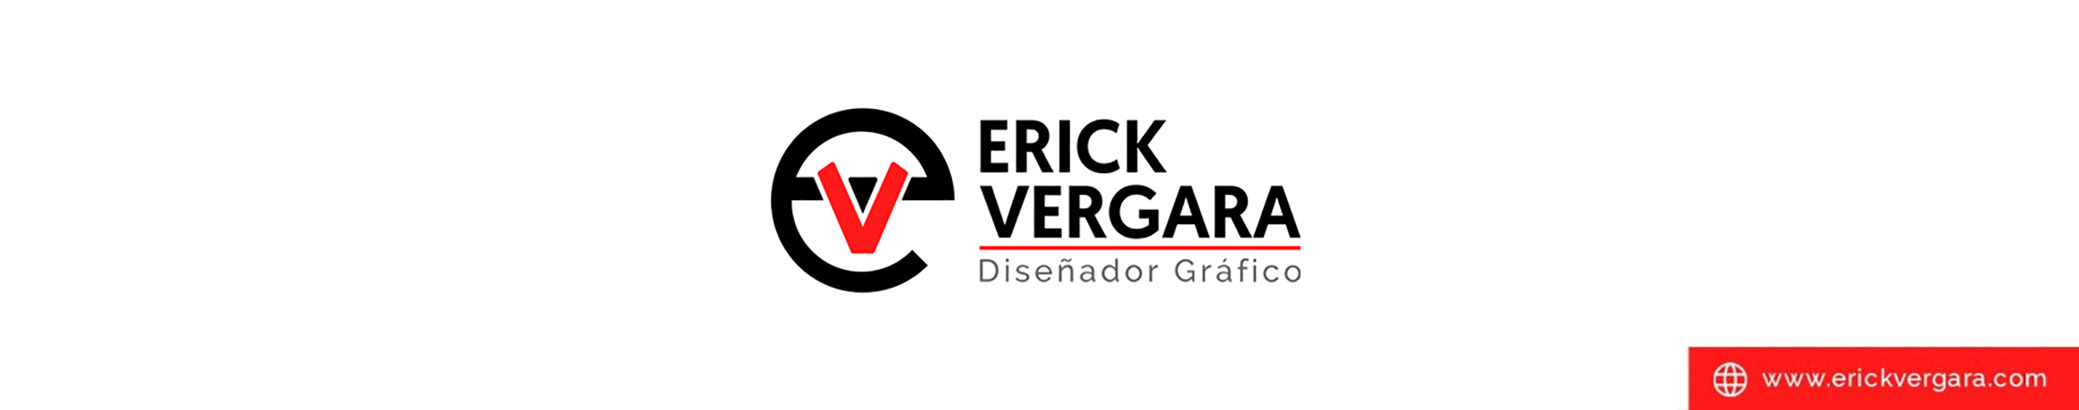 Bannière de profil de Erick Vergara